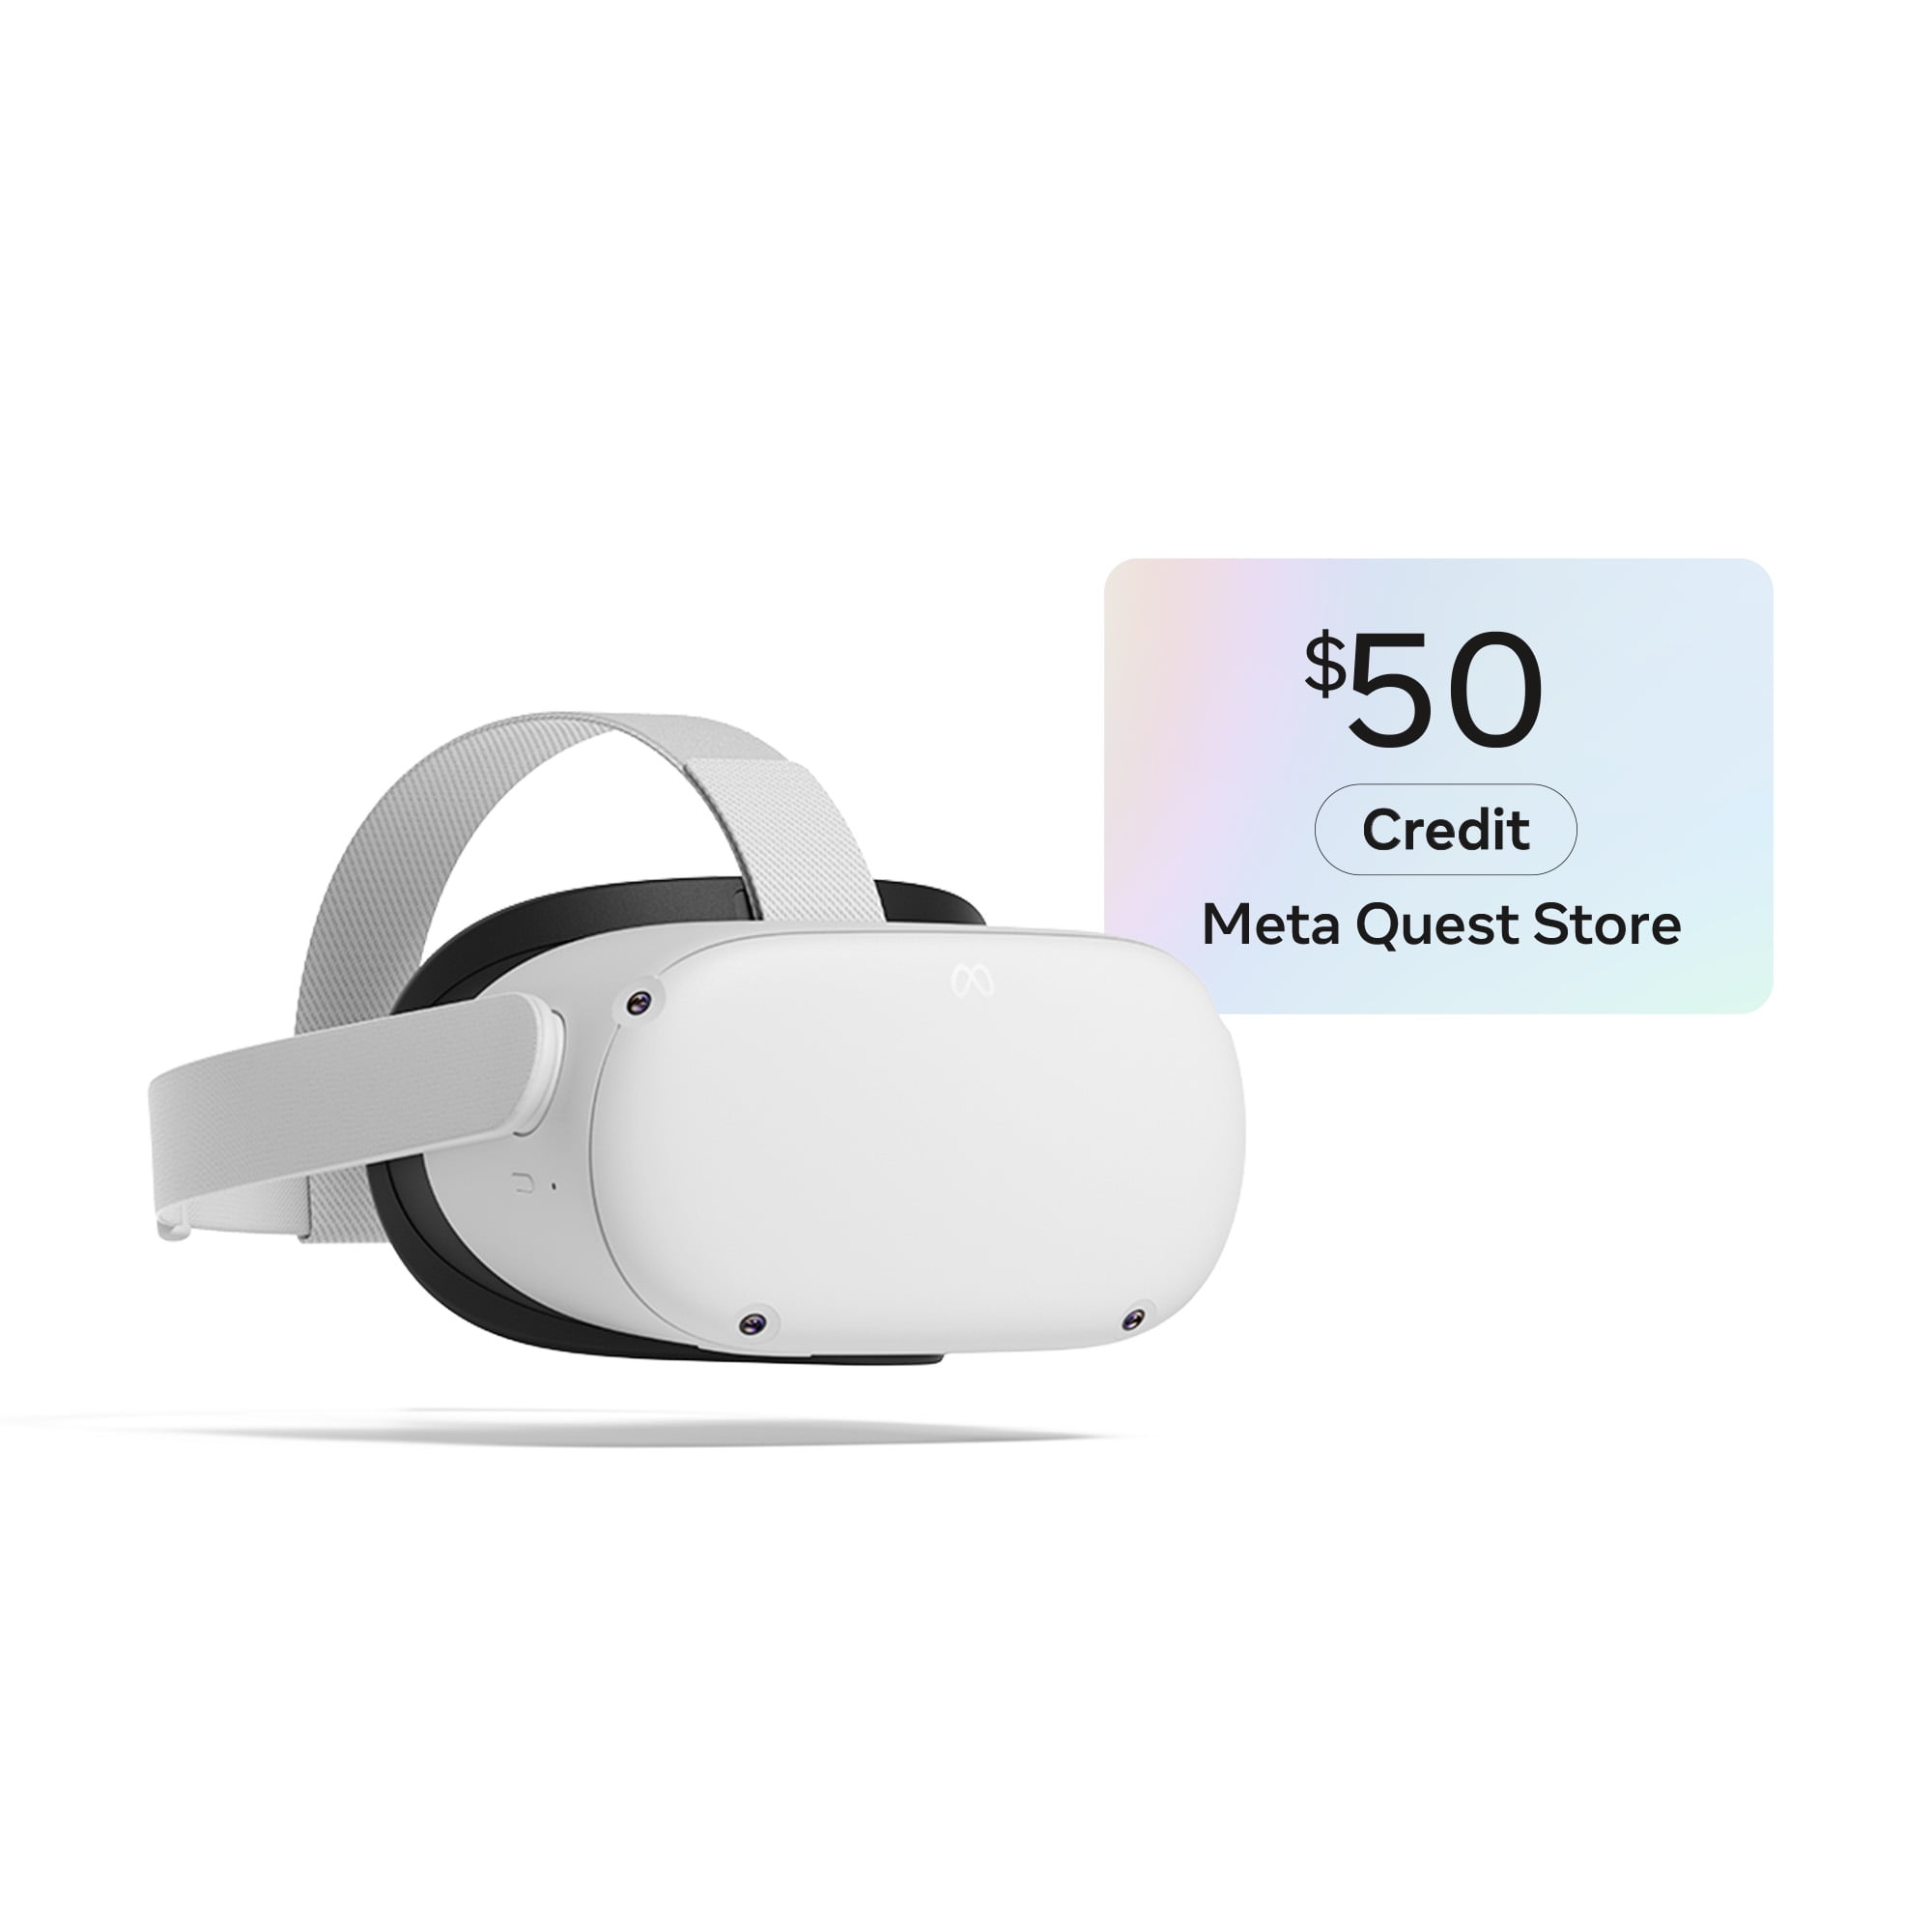 Meta Quest 2 128GB + $50 credit in the Meta Quest Store - Walmart.com